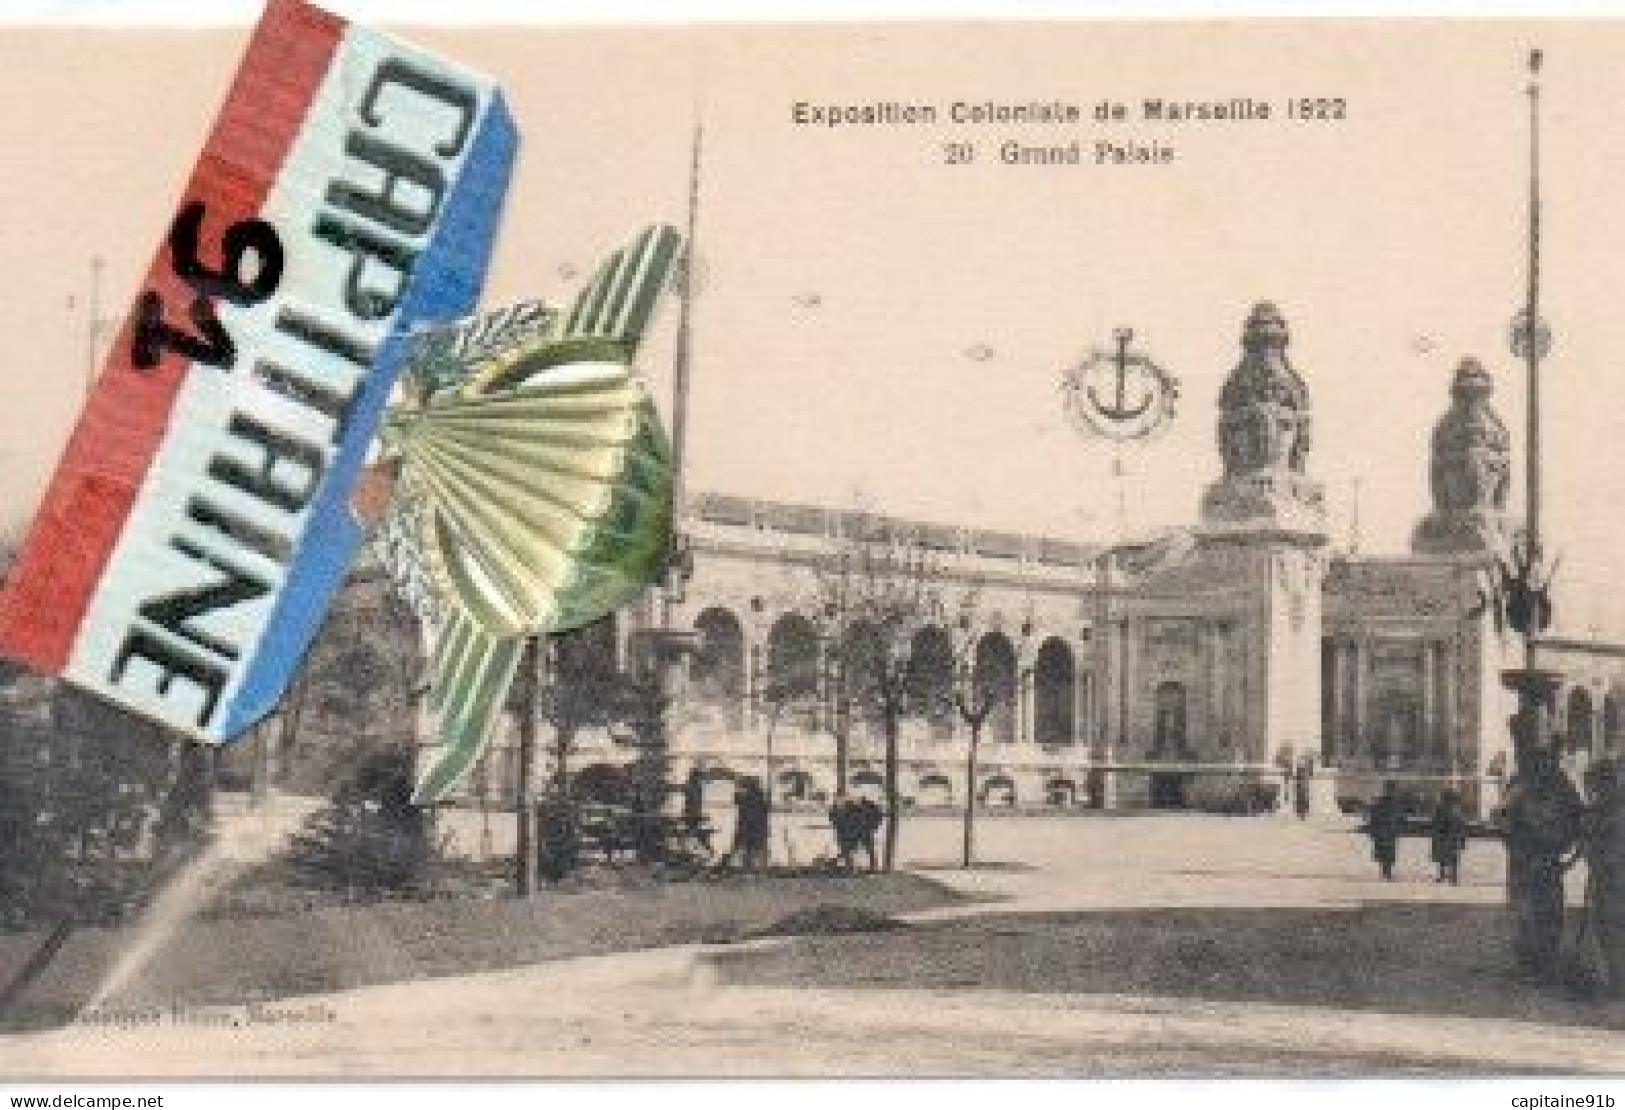 CPA EXPOSITION COLONIALE DE MARSELLE 1922 BOUCHES DU RHONE GRAND PALAIS. X X - Colonial Exhibitions 1906 - 1922